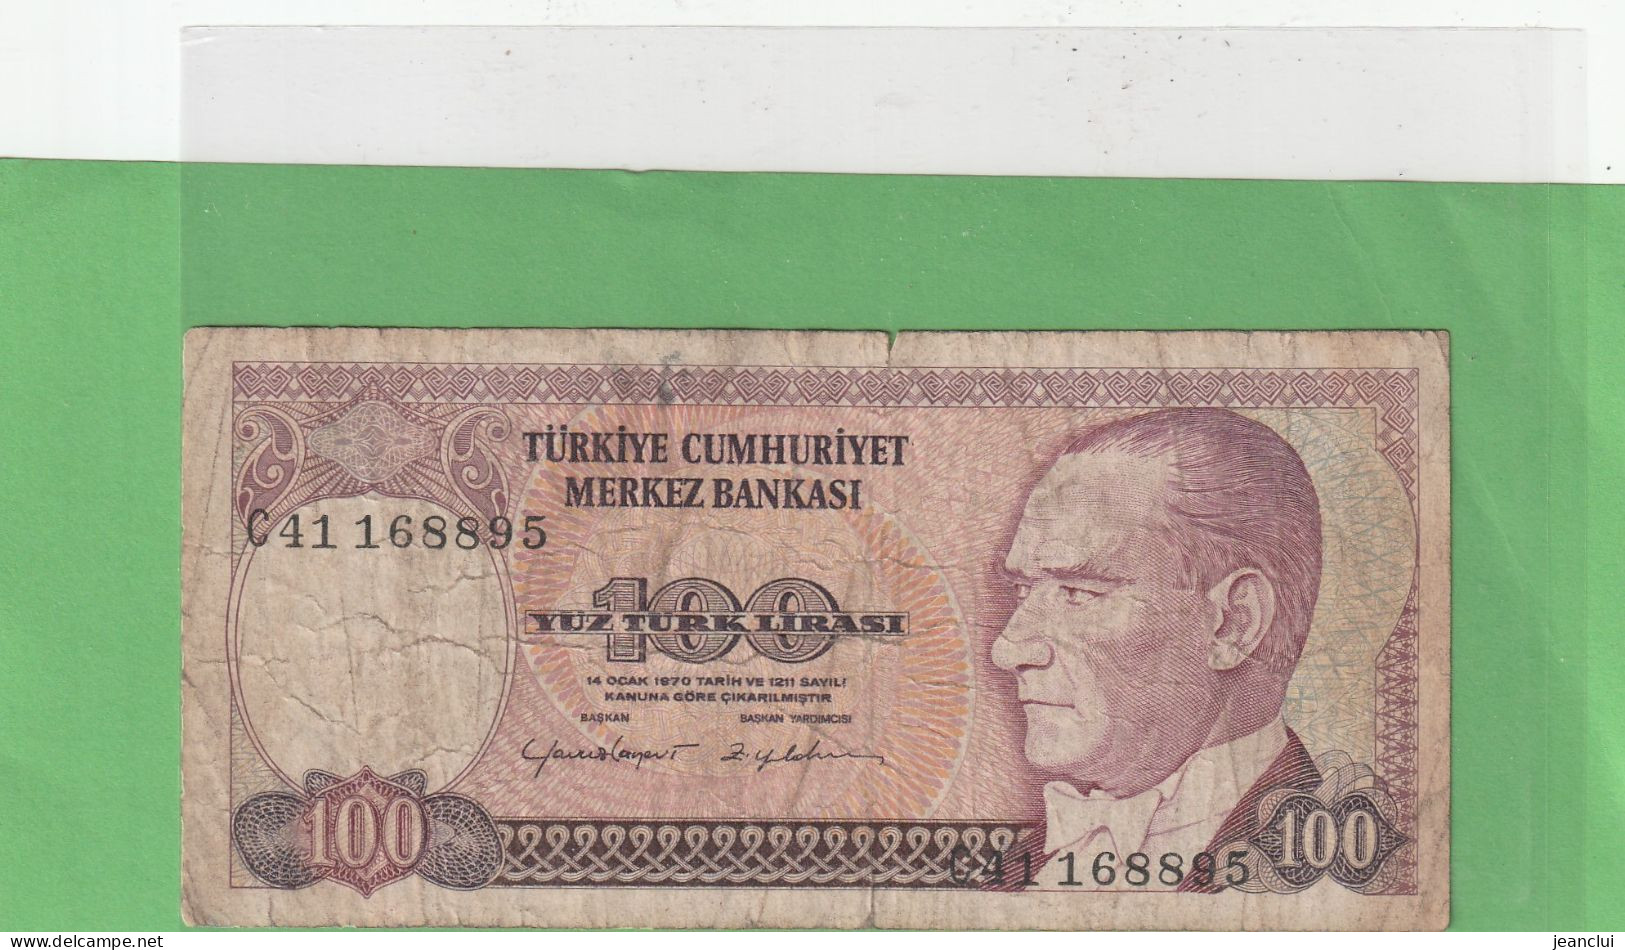 TURKIYE CUMHURIYET MERKEZ BANKASI . 100 LIRA . 14 OCAK 1970  . N°  C41 168895 .  2 SCANNES  .  BILLET USITE - Turquia